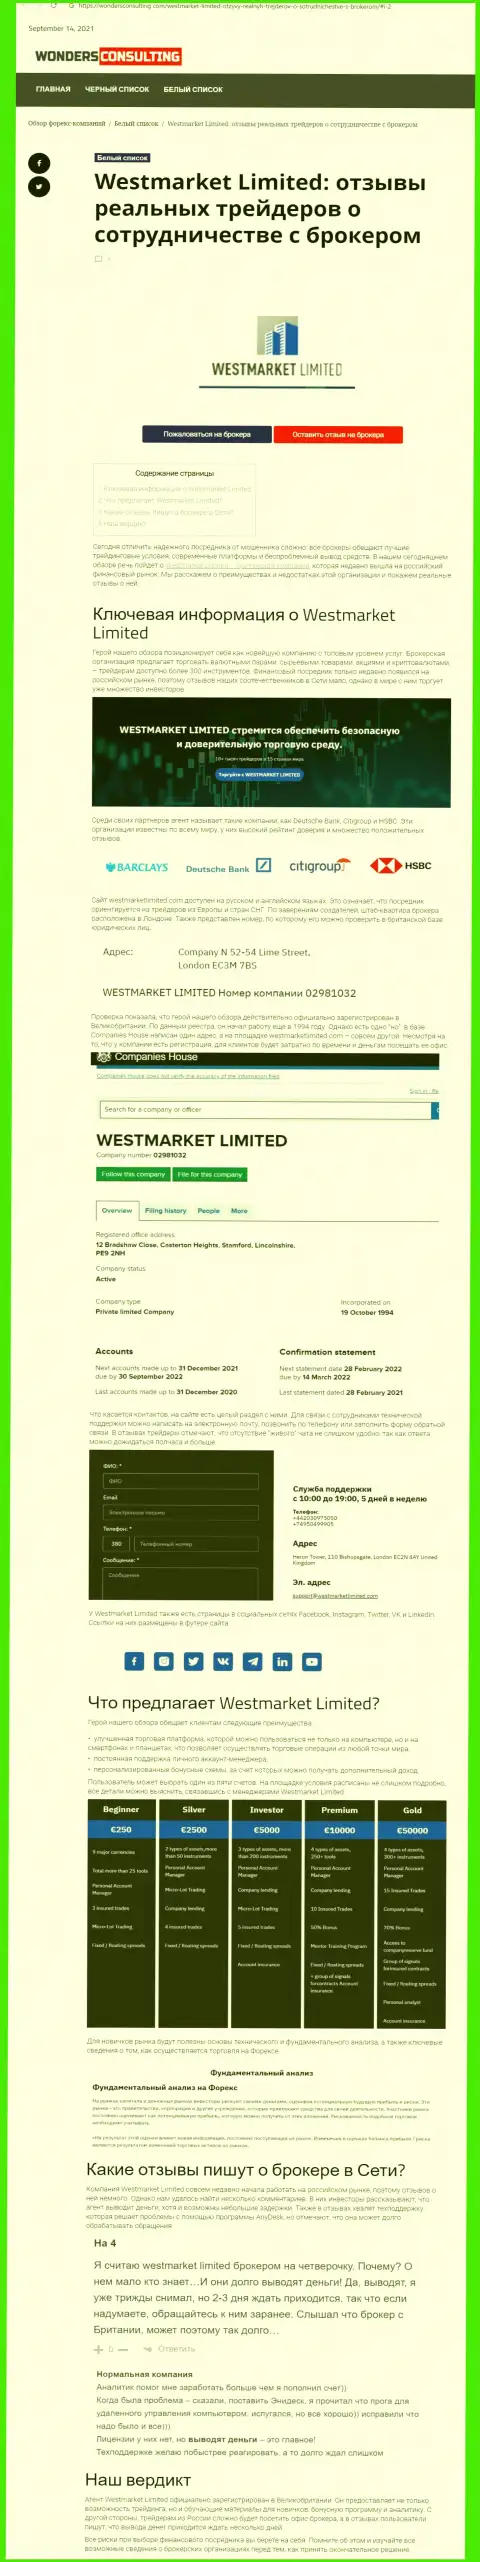 Публикация о forex брокере WestMarket Limited на сайте вондерконсалтинг ком